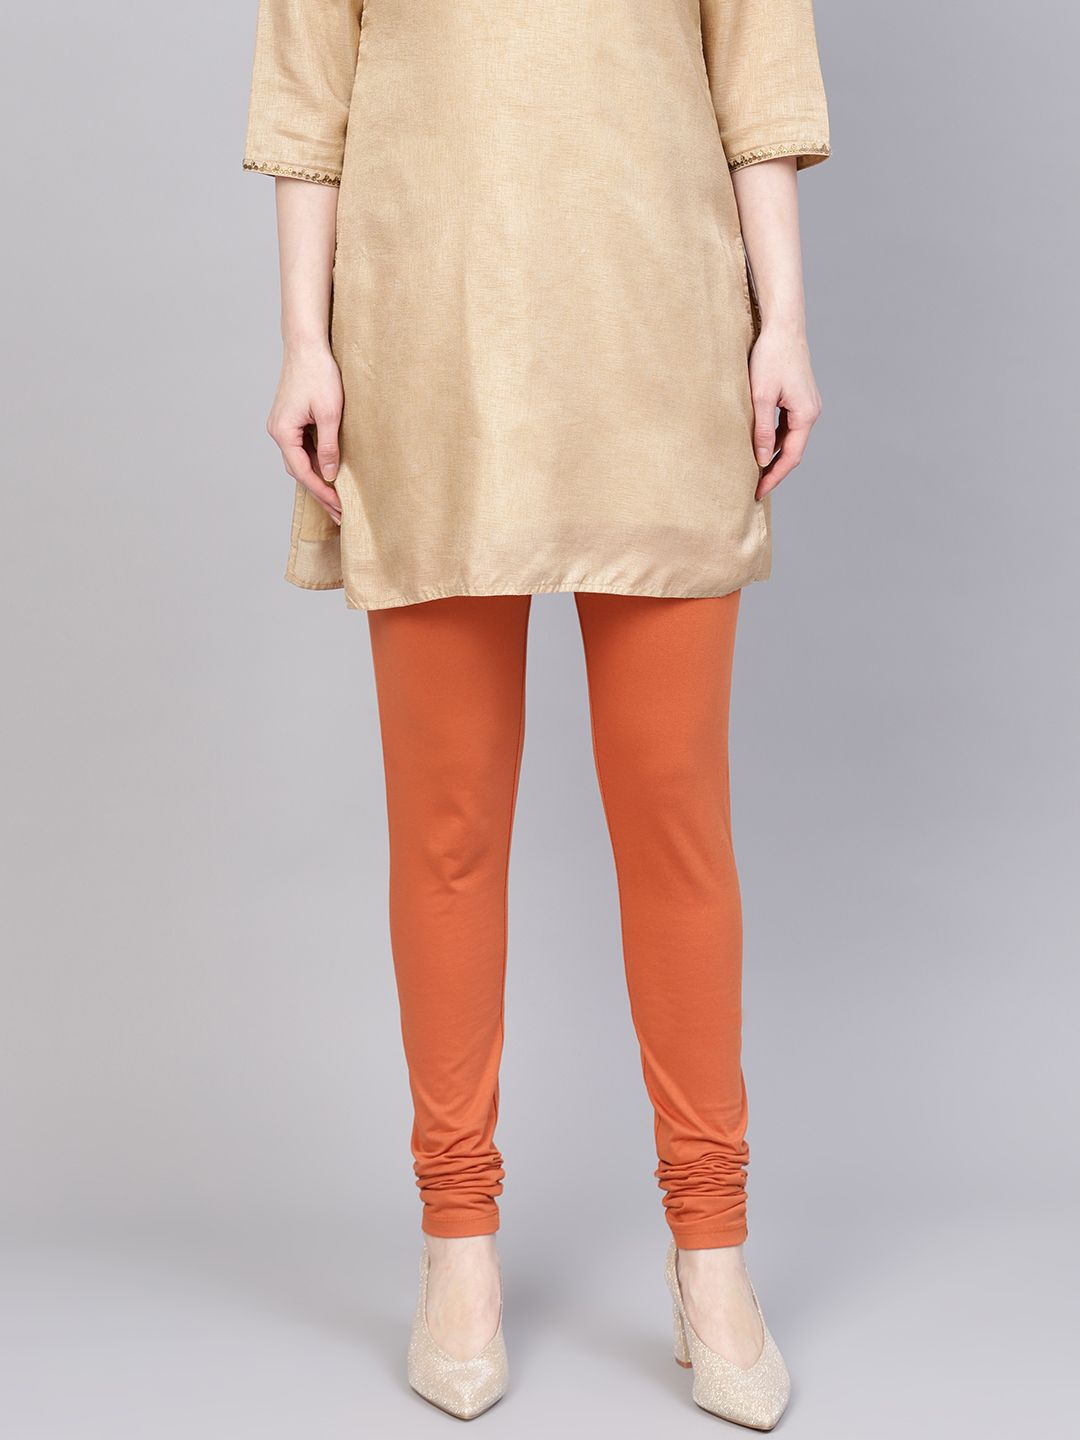 W Women Rust Orange Solid Churidar Length Leggings Price in India